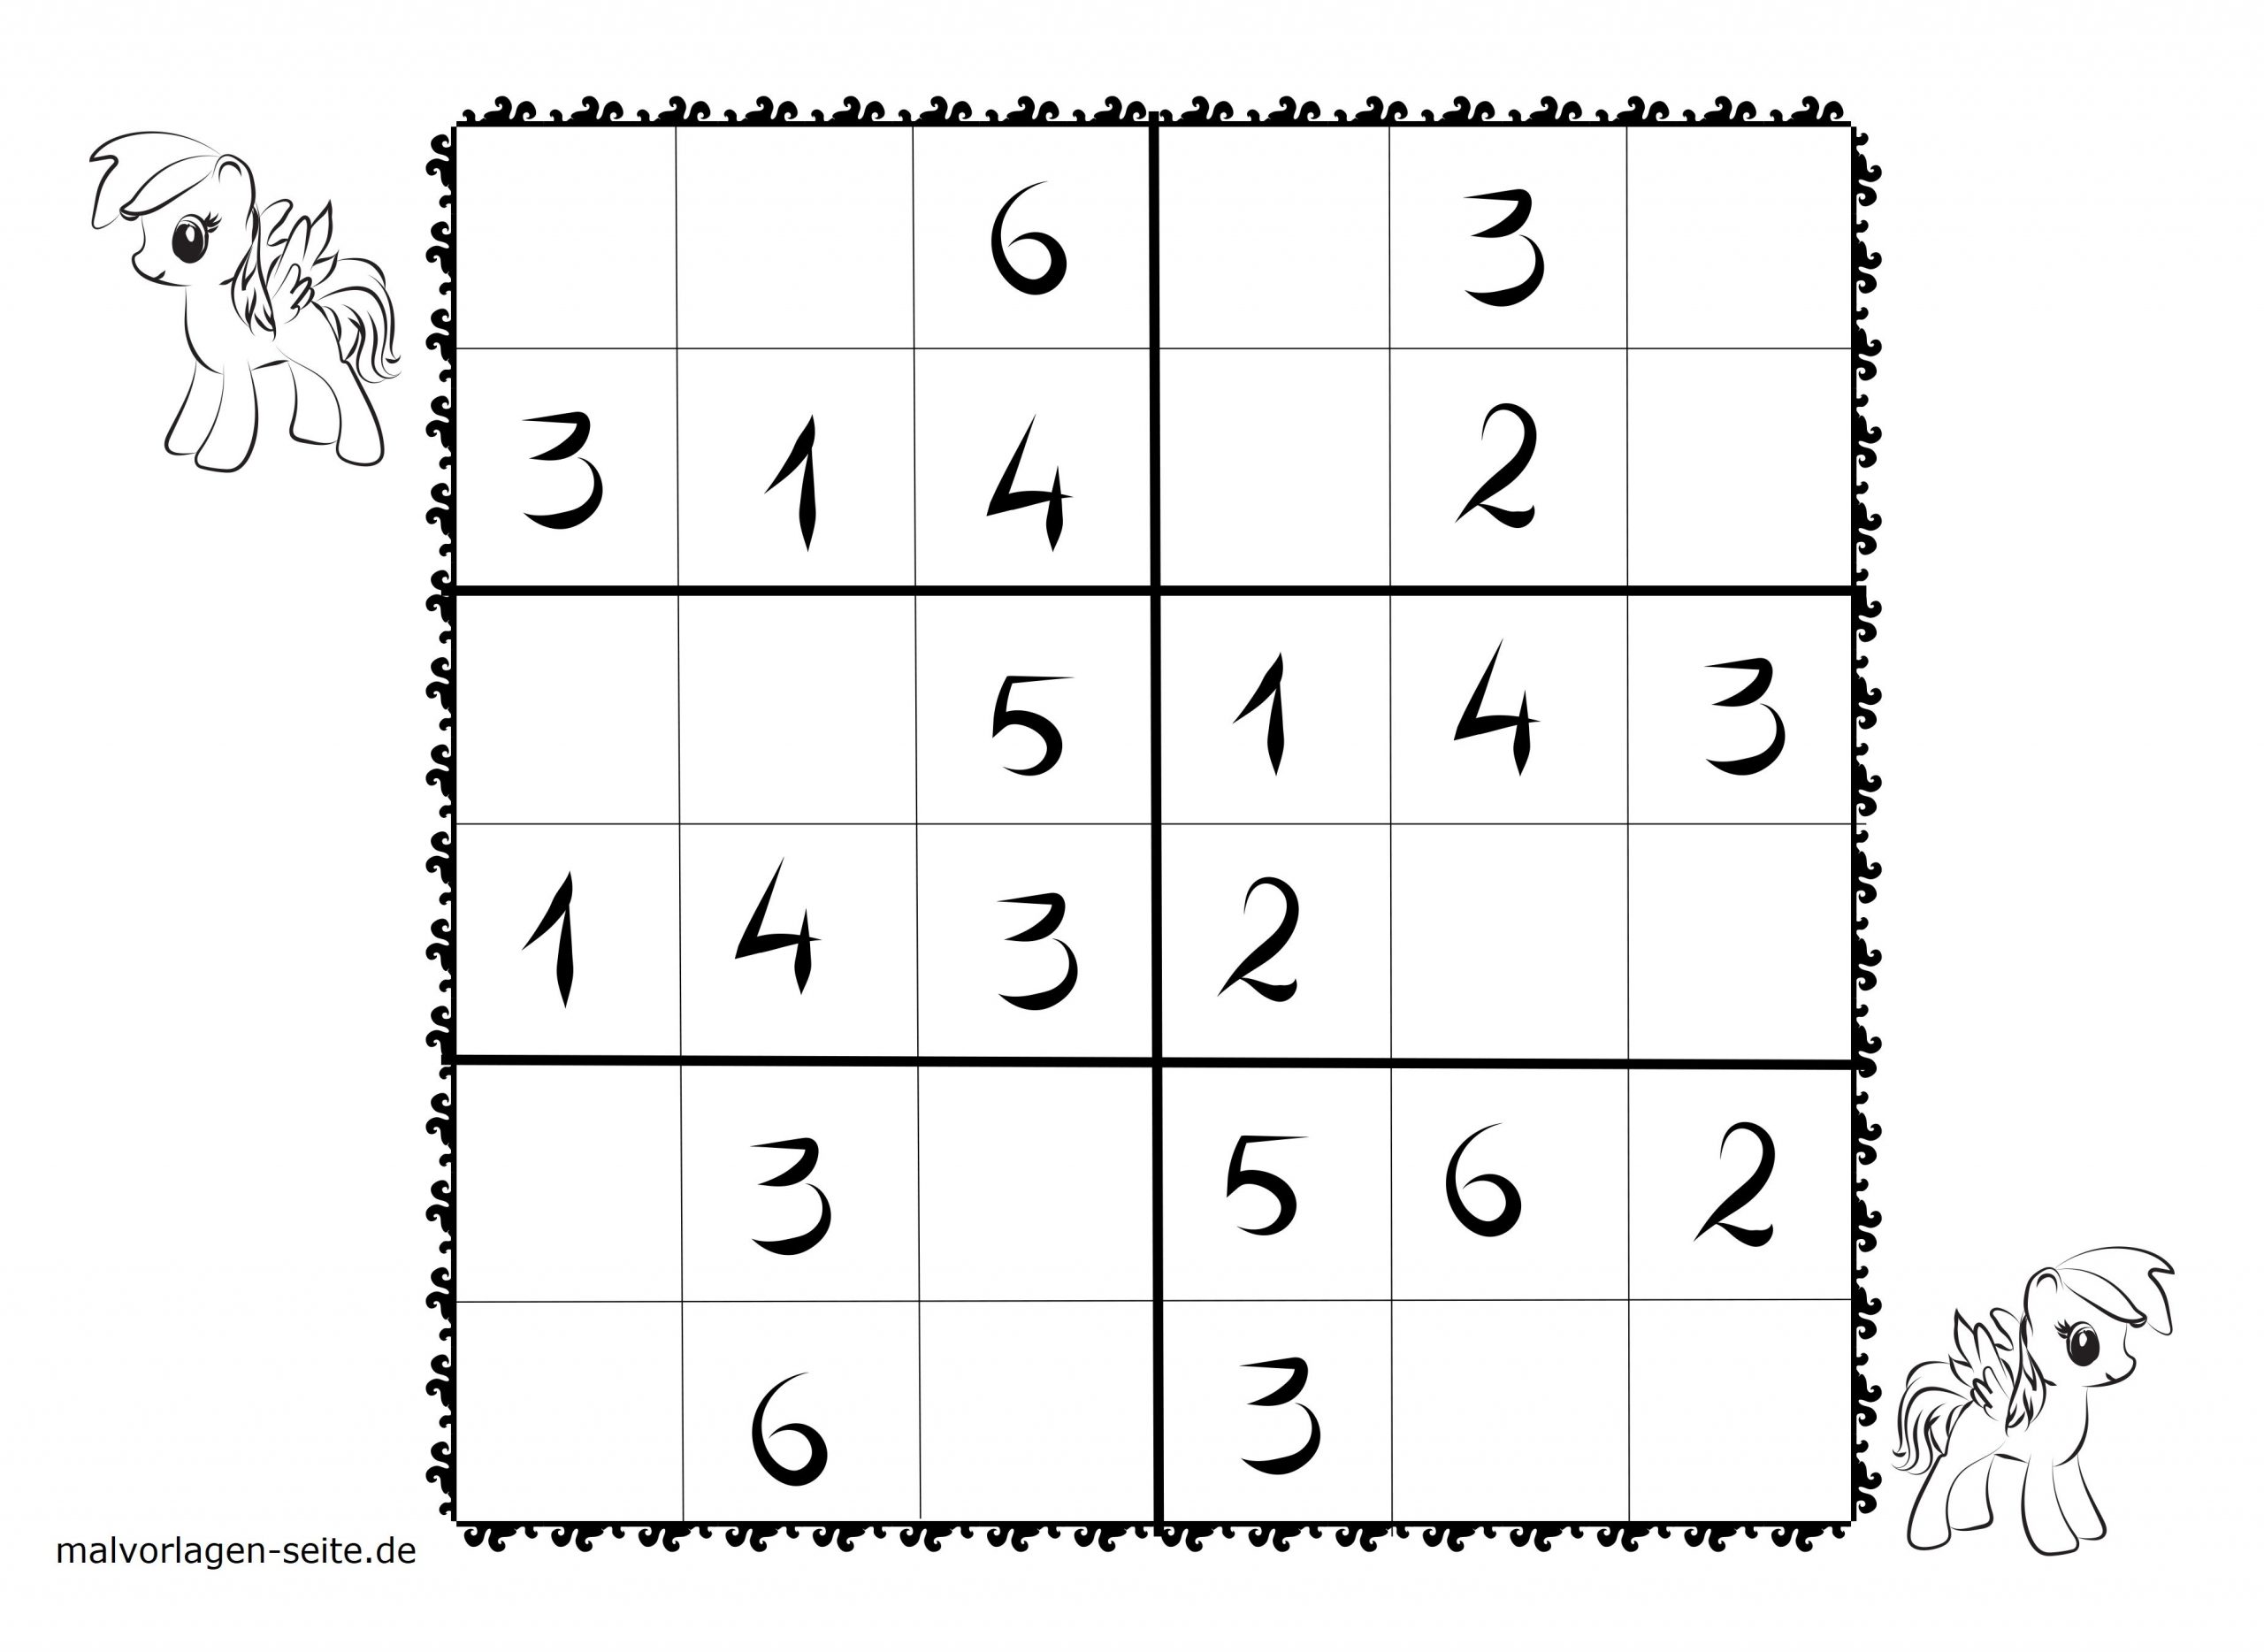 Malvorlagen Sudoku Kinder | Coloring And Malvorlagan verwandt mit Kindersudoku